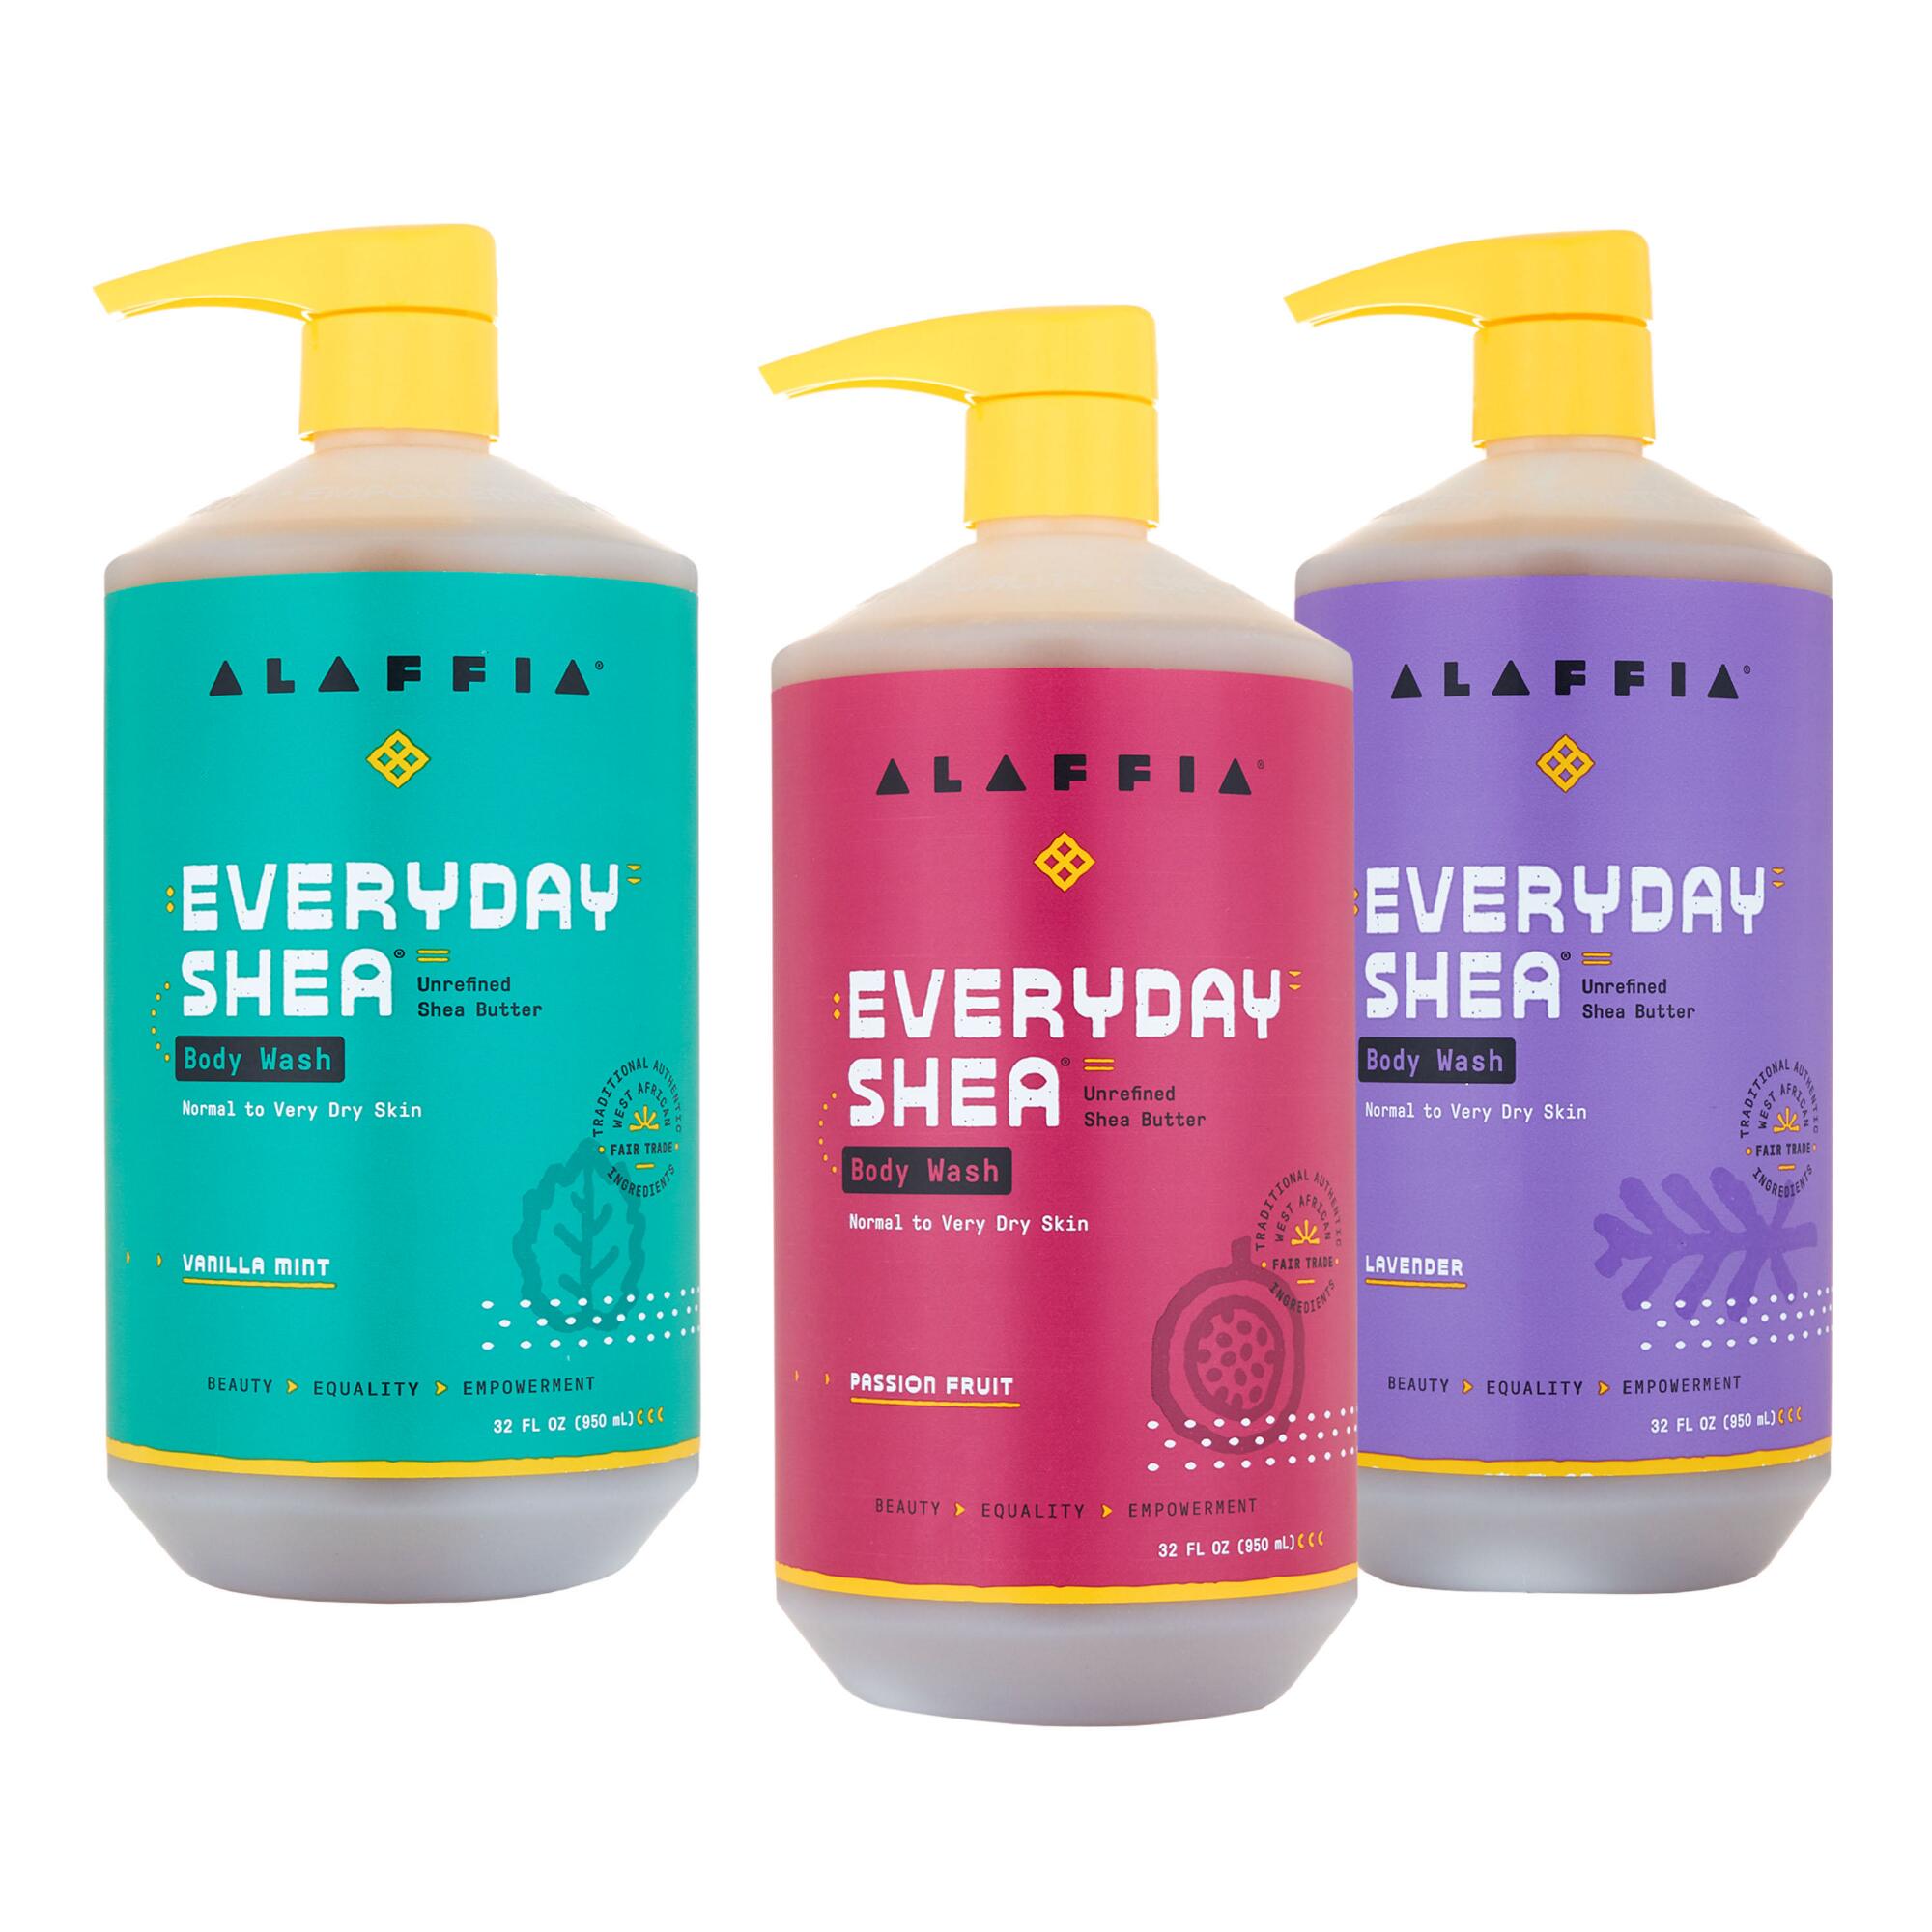 Alaffia Everyday Shea Body Wash by World Market